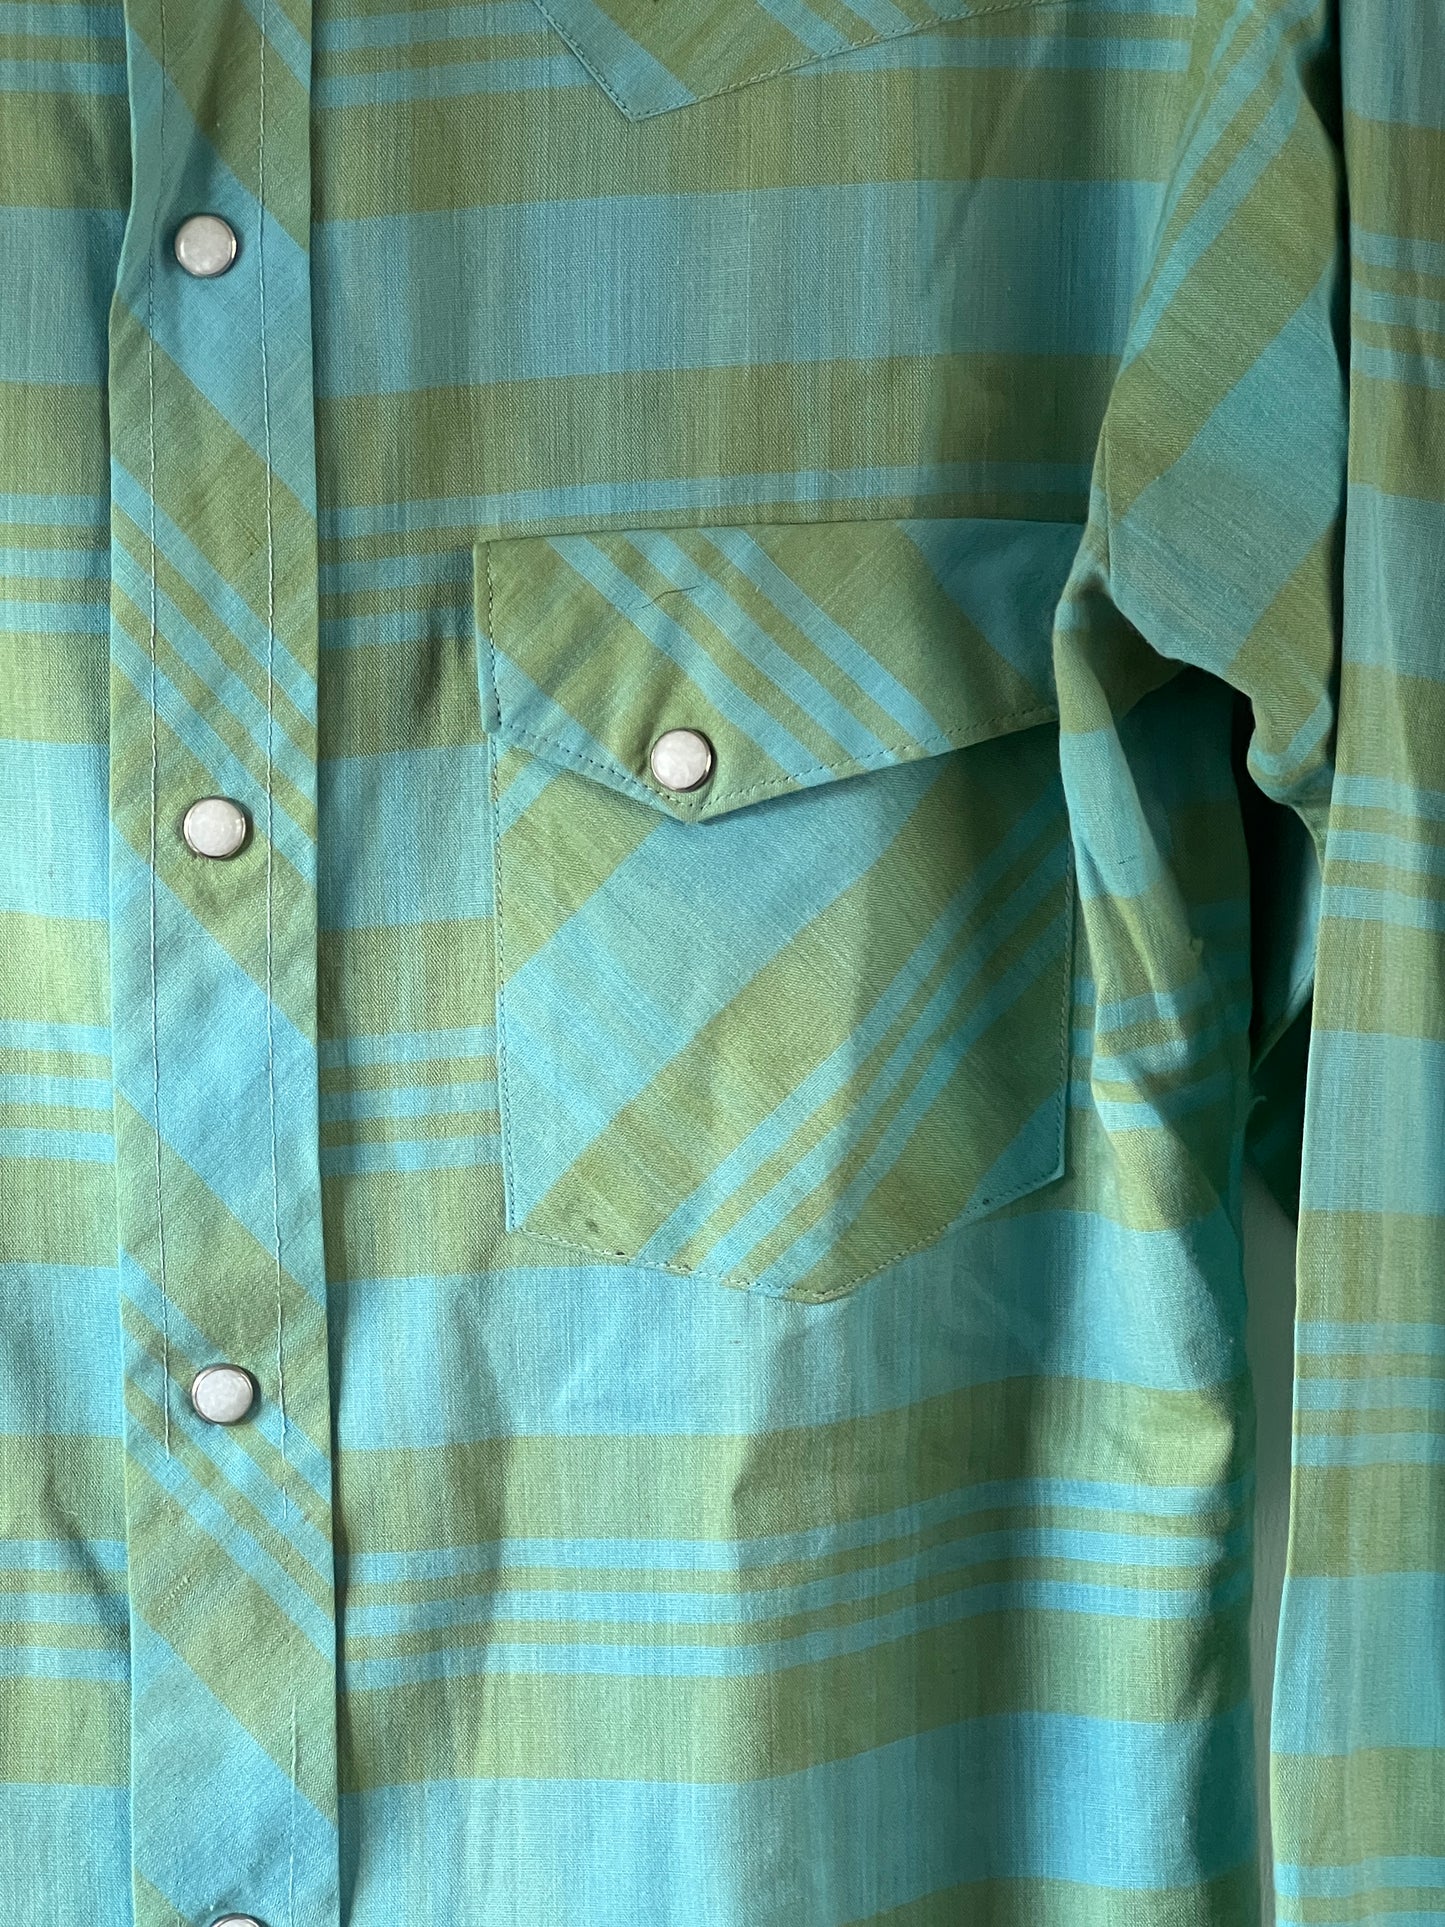 Vintage Western green shadow check plaid long sleeve shirt sz M